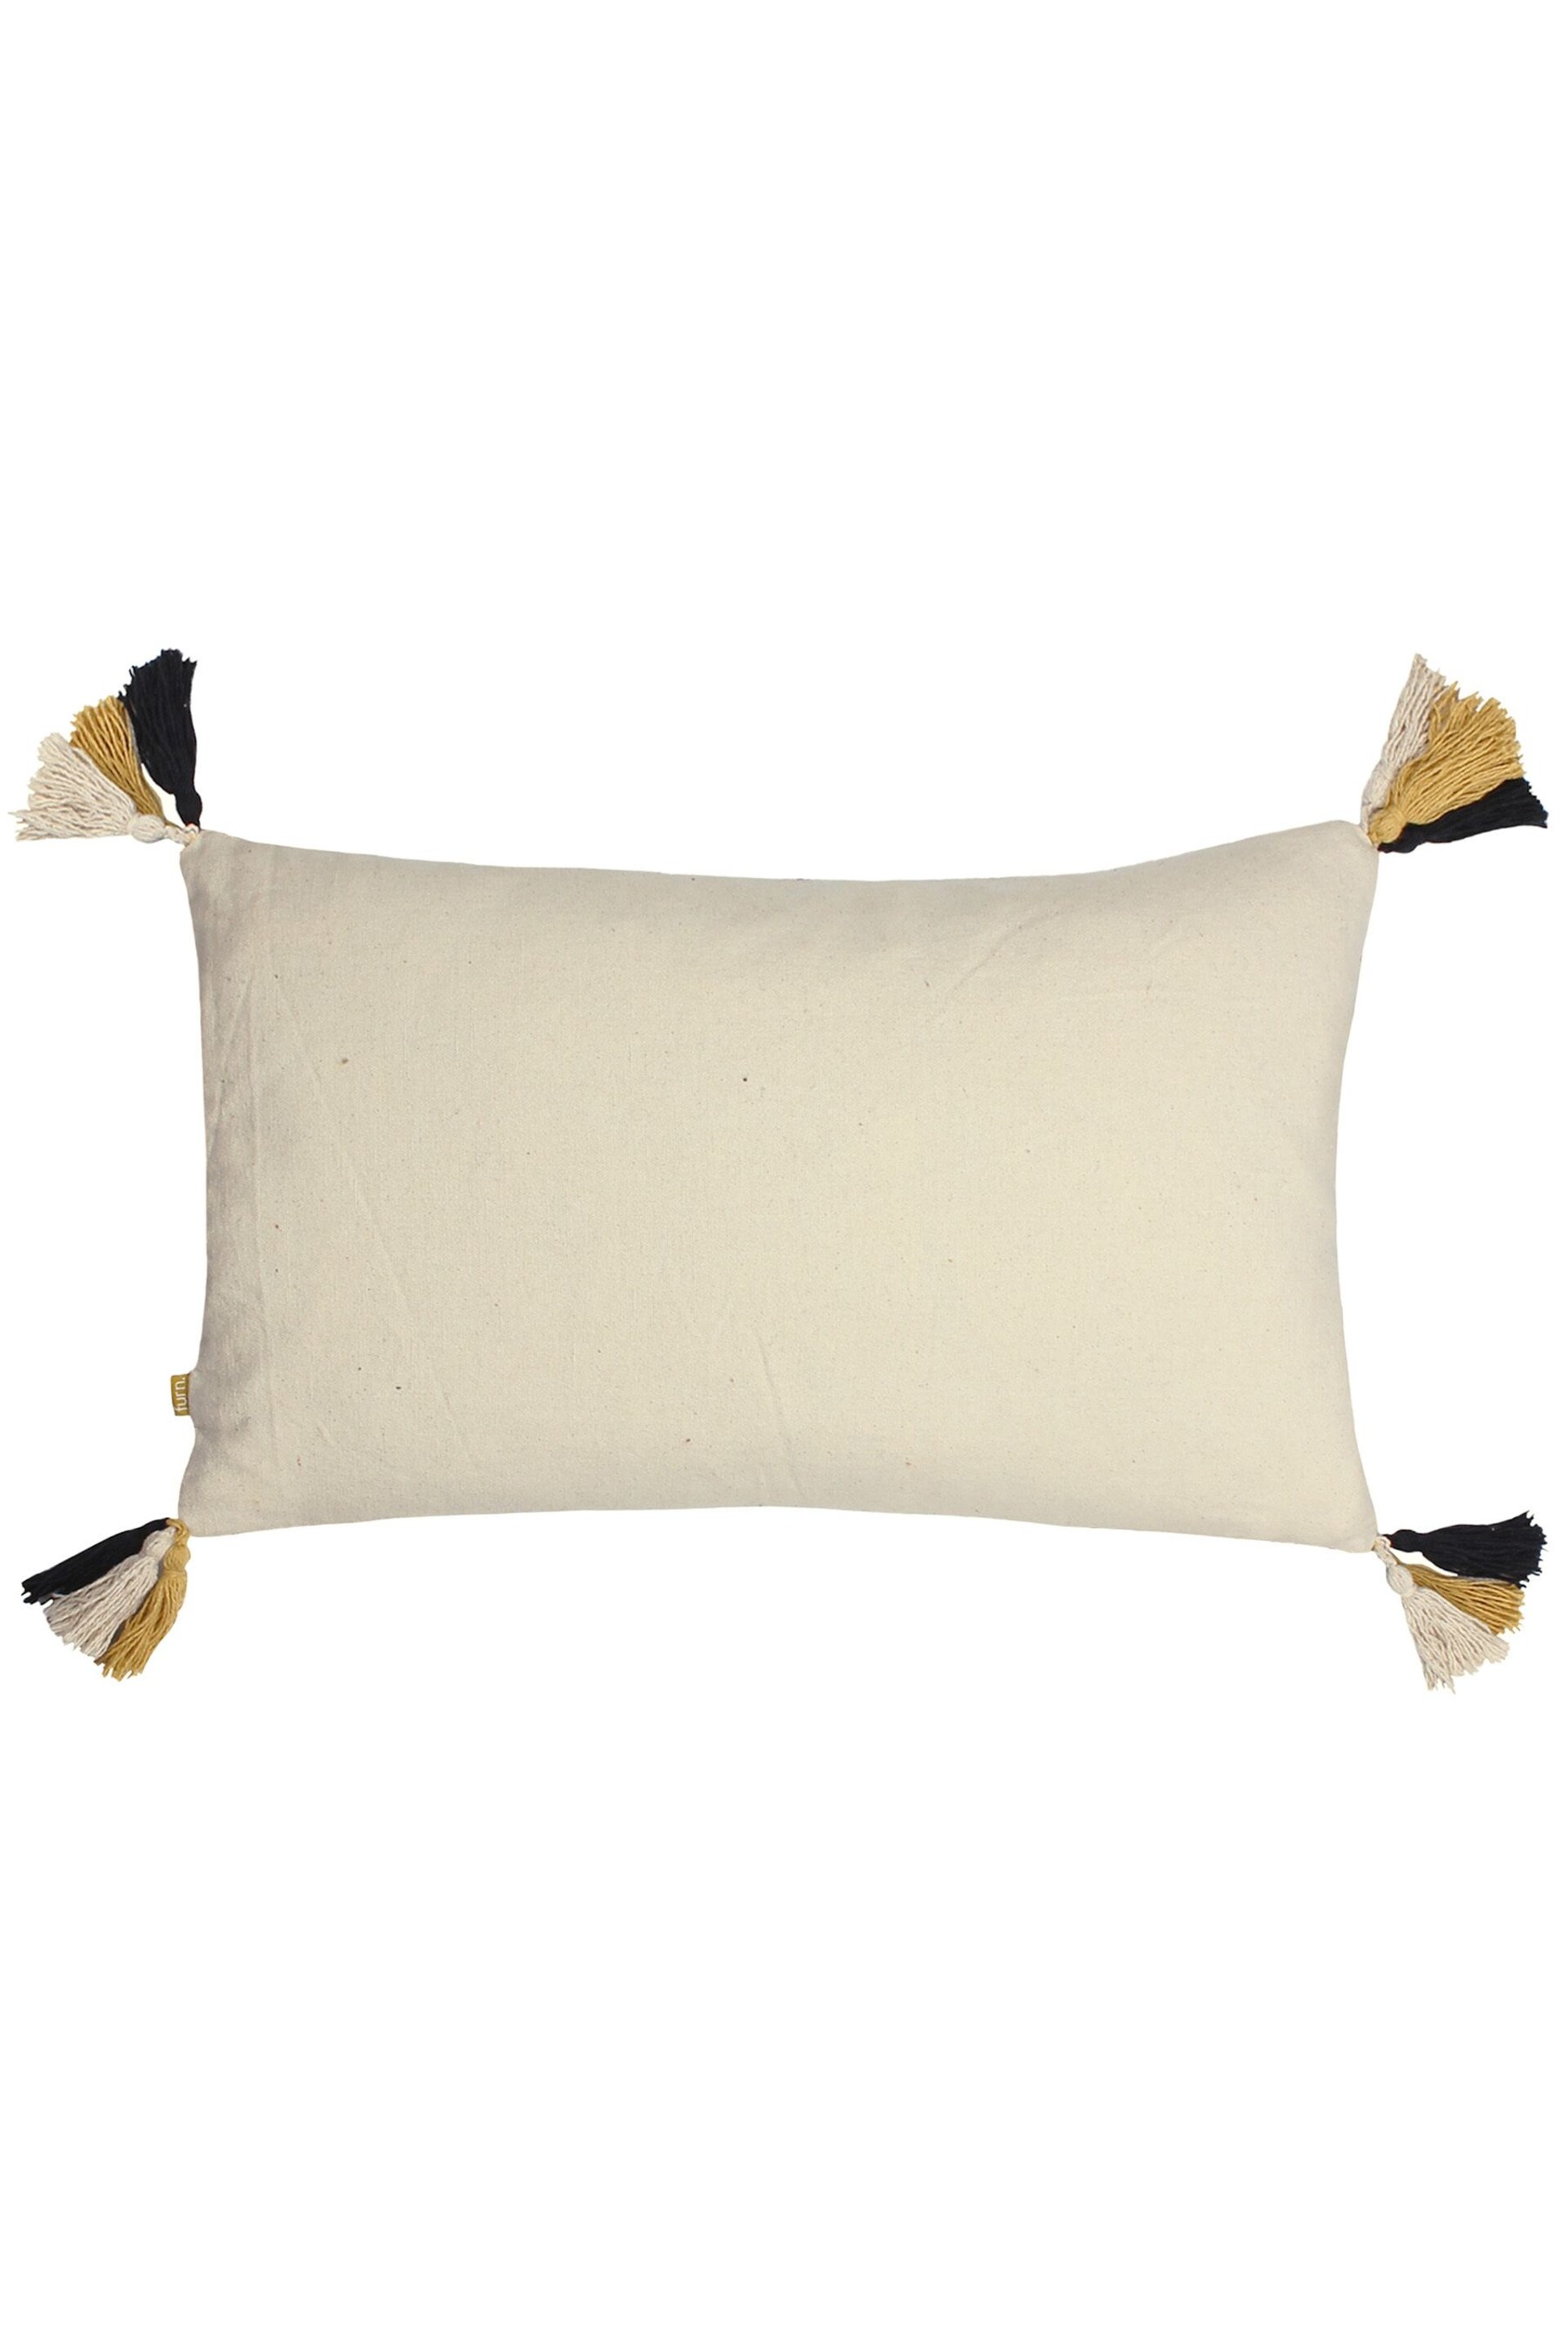 furn. Black Benji Tasselled Jacquard Diamond Tufted Cotton Cushion - Image 3 of 6